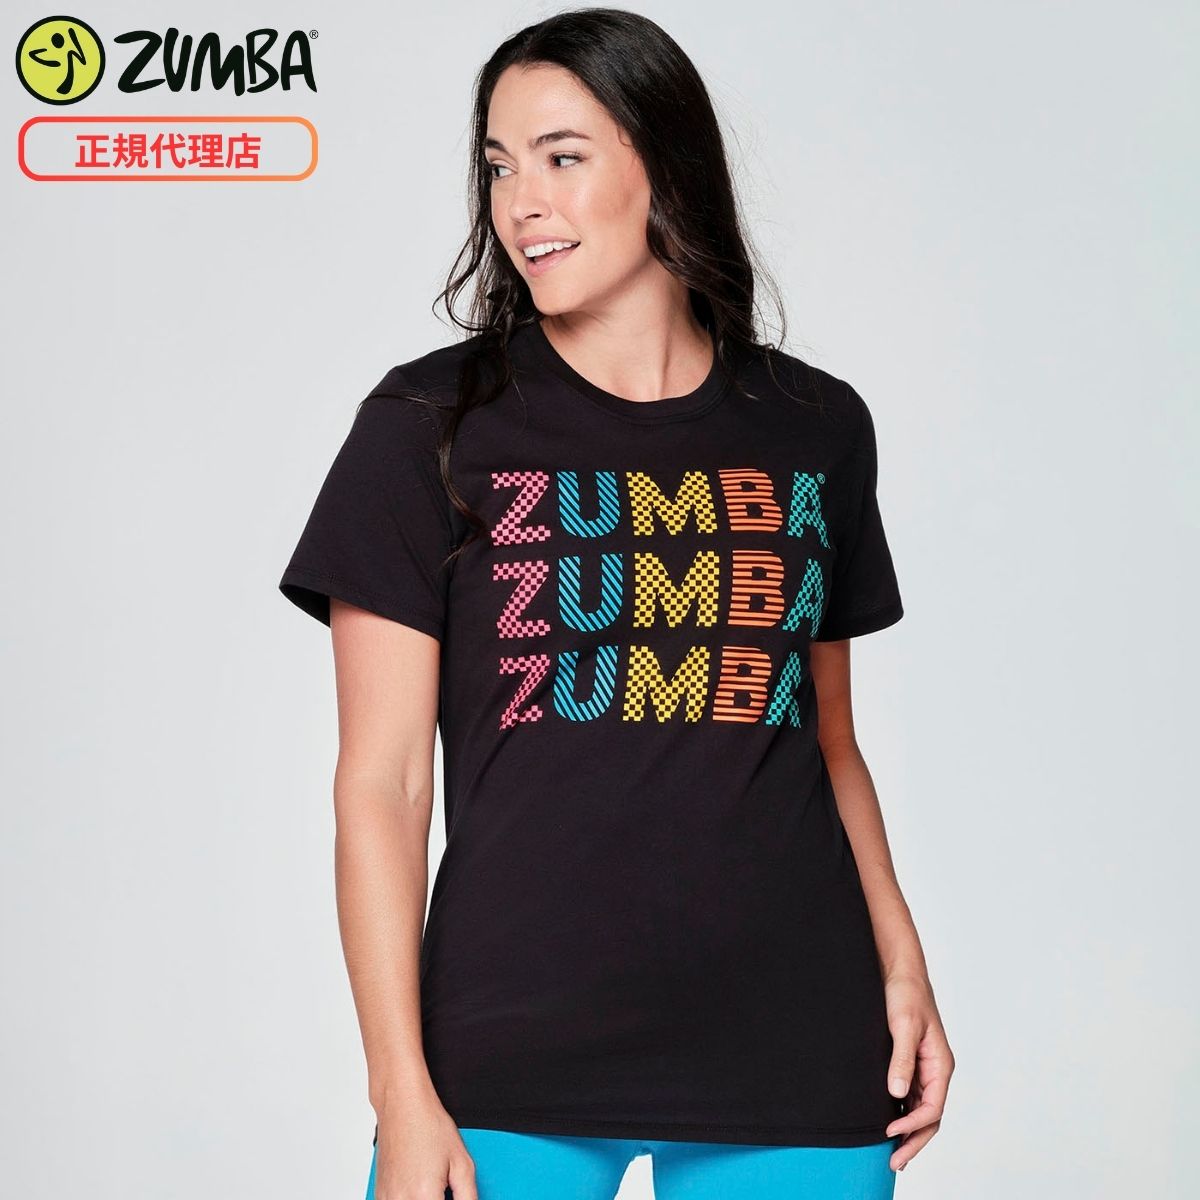 ZUMBA ズンバ 正規品 Tシャツ BLACK XS Sサイズ M Lサイズ - ウェア